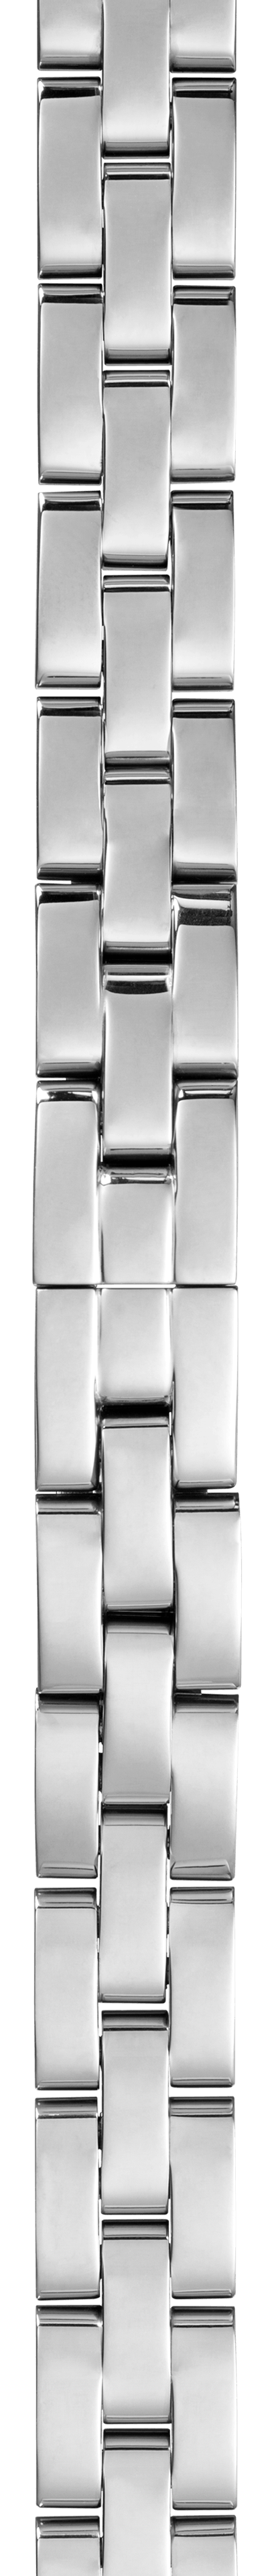 Stainless Steel Watch Straps - Condor Straps